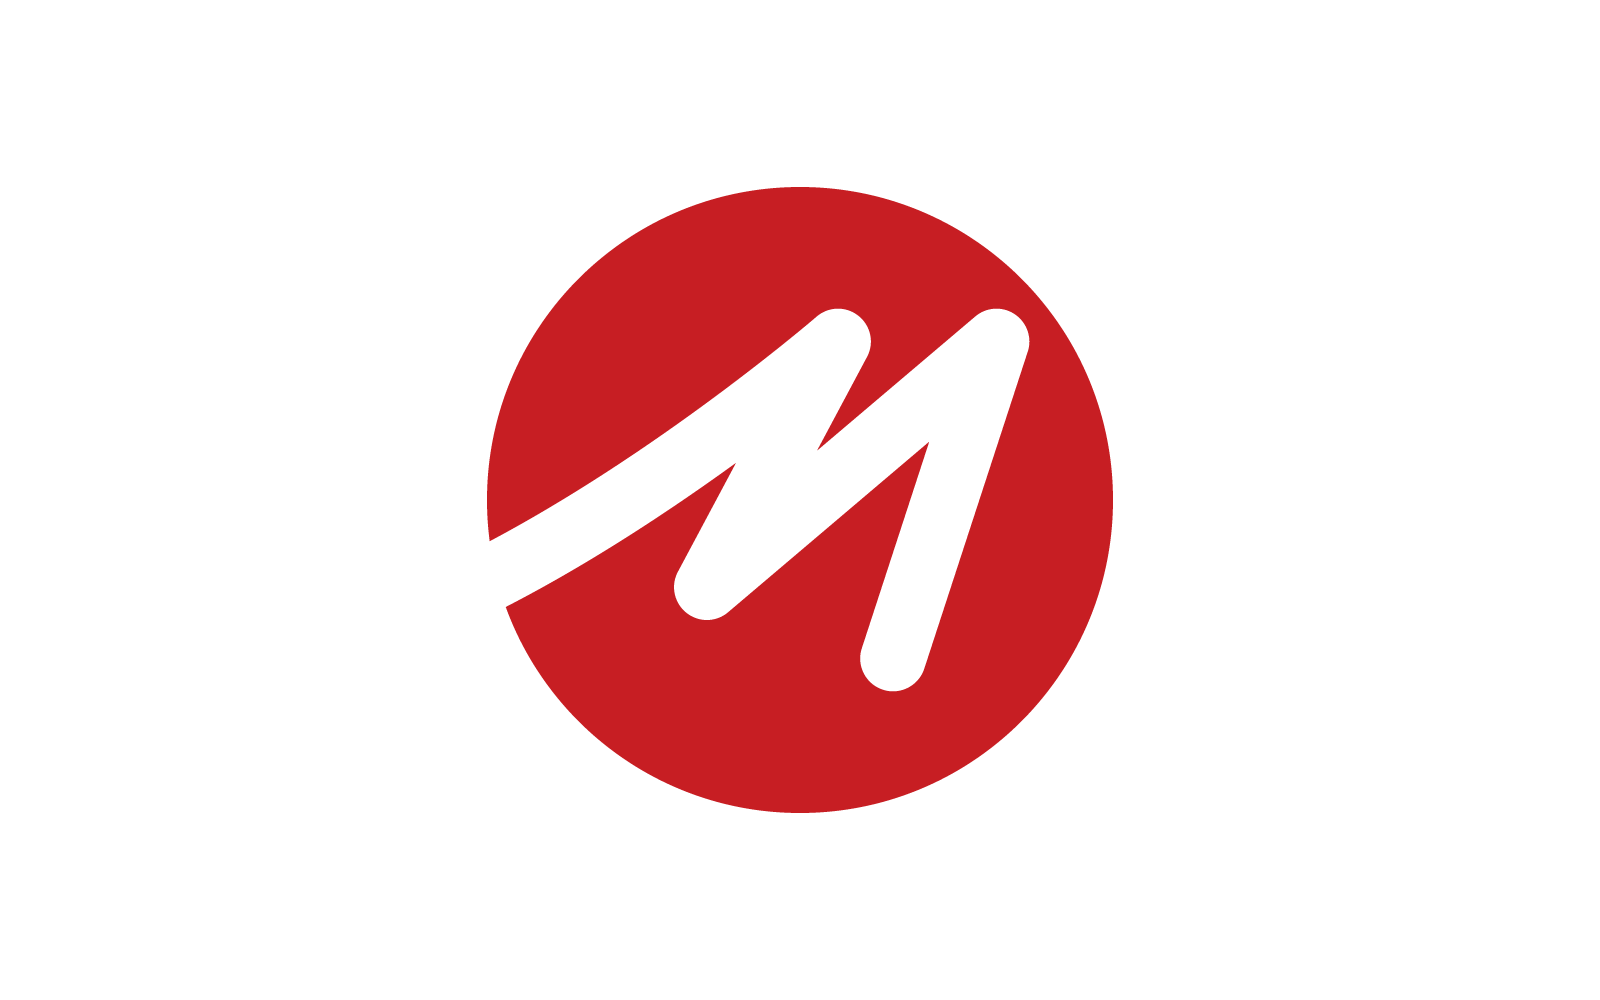 M or N Letter business logo illustration template